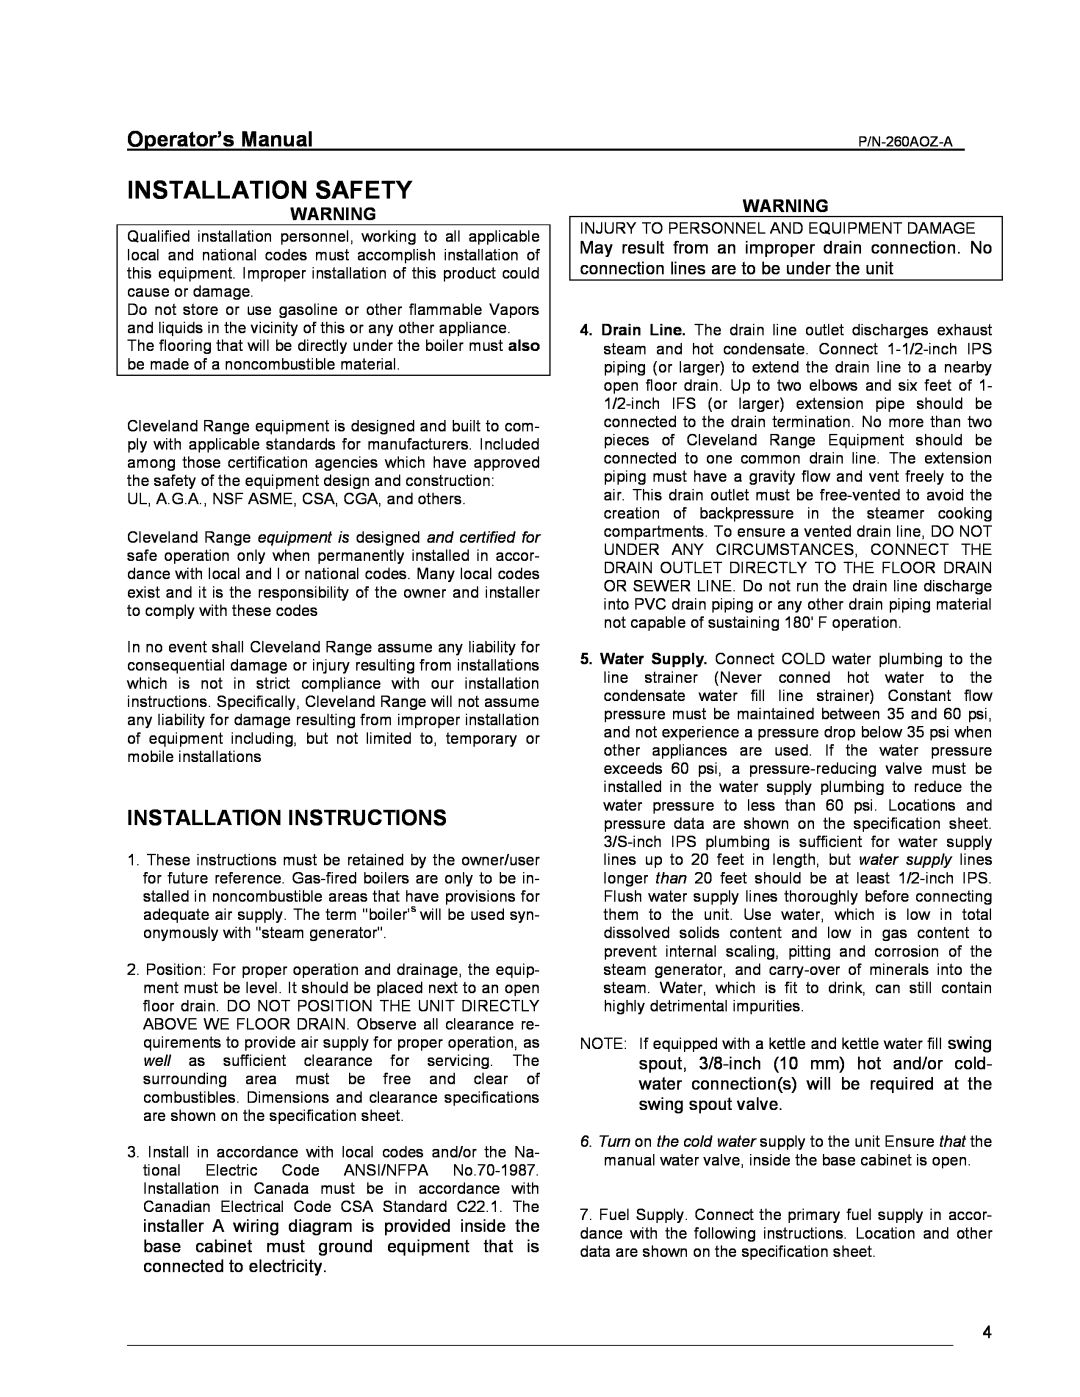 Cleveland Range 24/36CGM manual Installation Safety, Installation Instructions, Operator’s Manual 